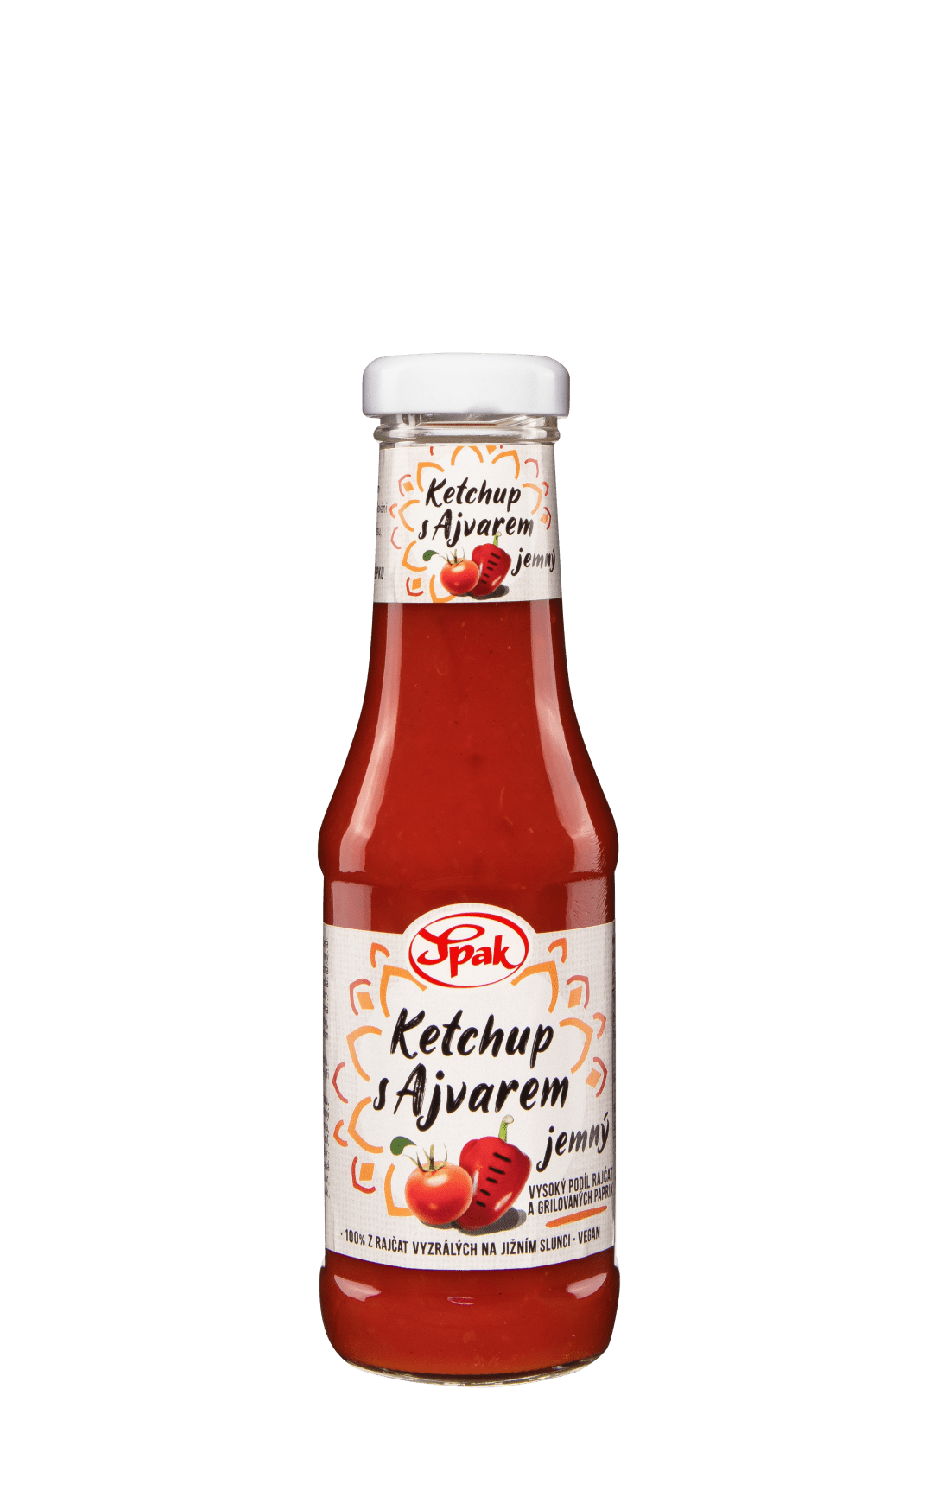 Ketchup-s-Ajvarem-jemny-330g-zmenšený